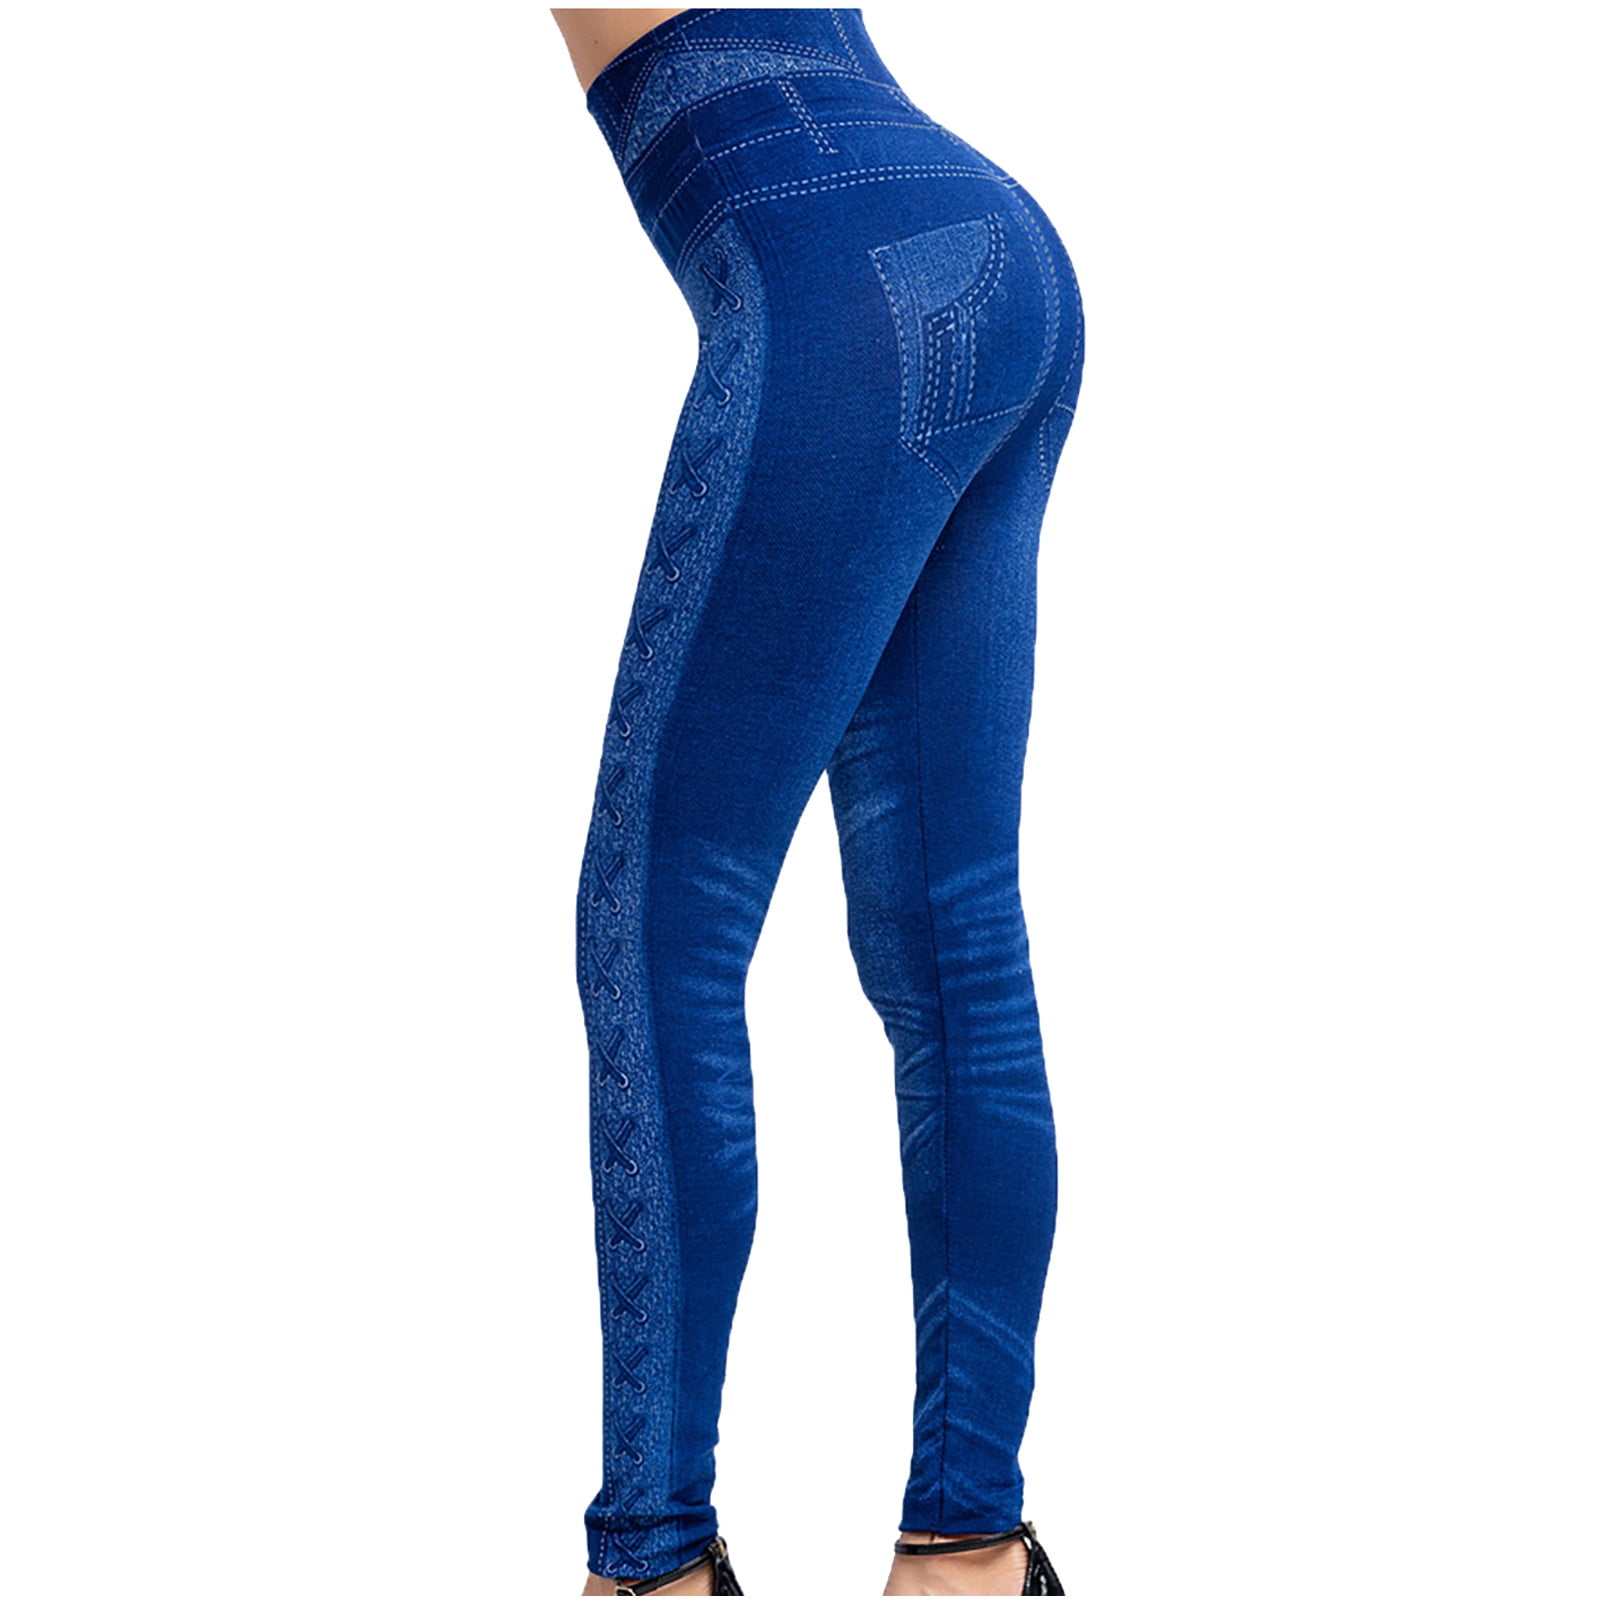 Reduce Price Hfyihgf Womens Denim Print Leggings High Waist Fake Jeans Butt Lifting Seamless Trouser Skinny Pants Look Print Jeggings Blue 3XL e72e2d8c 76a5 4630 bb34 2d1656920cca.52737680402db30515ff54b86559f36d